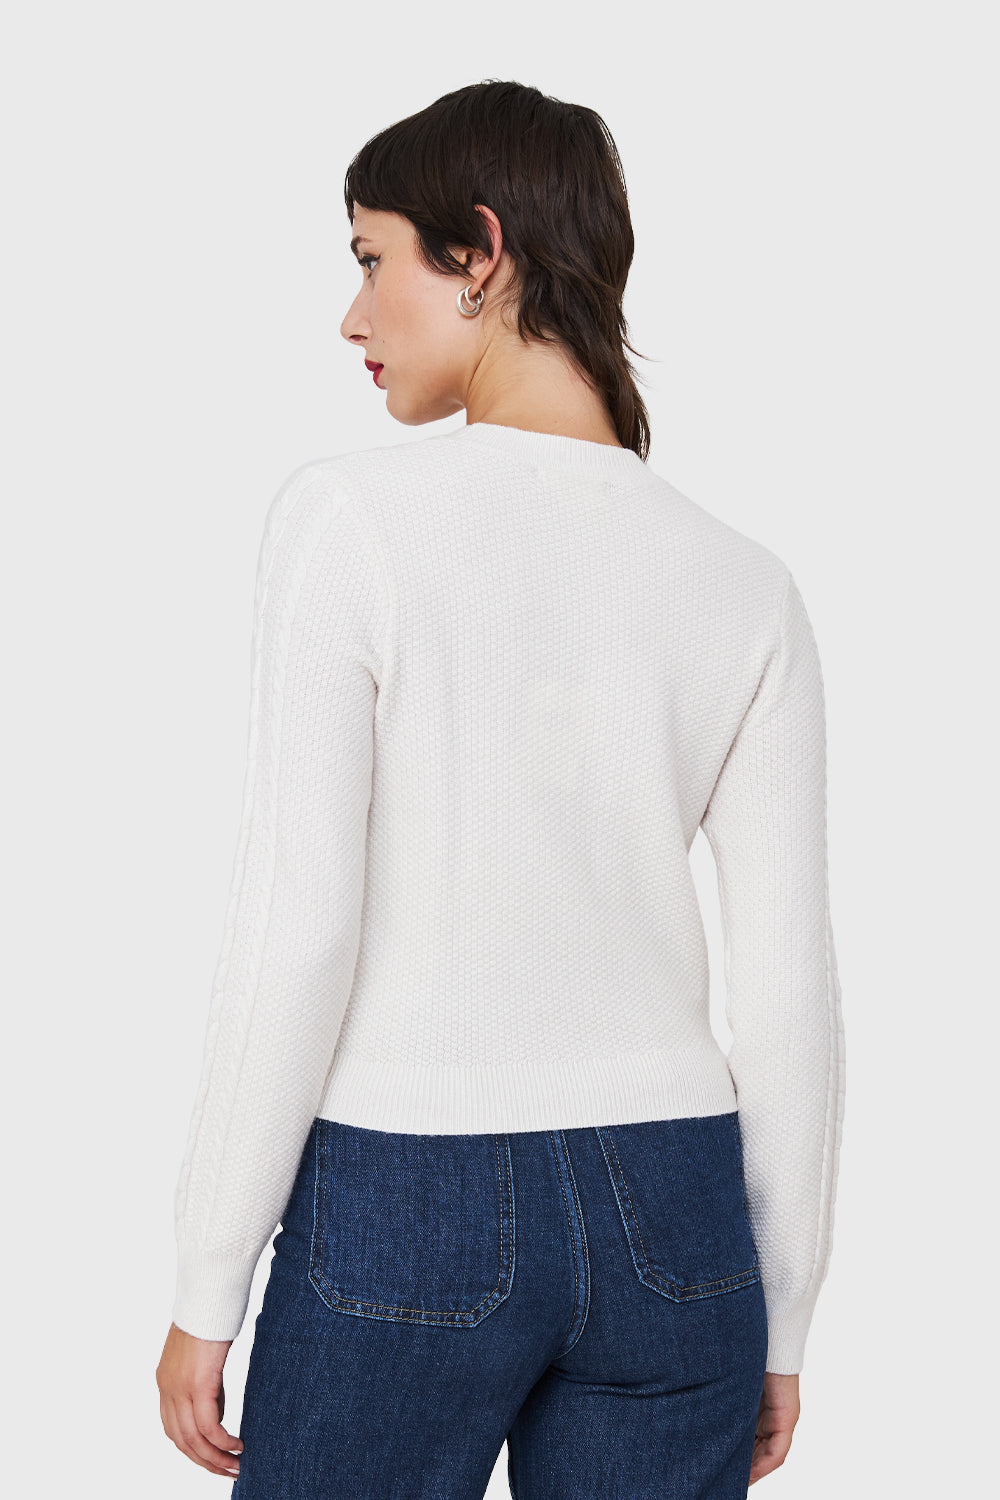 Sweater Punto Trenzado Blanco